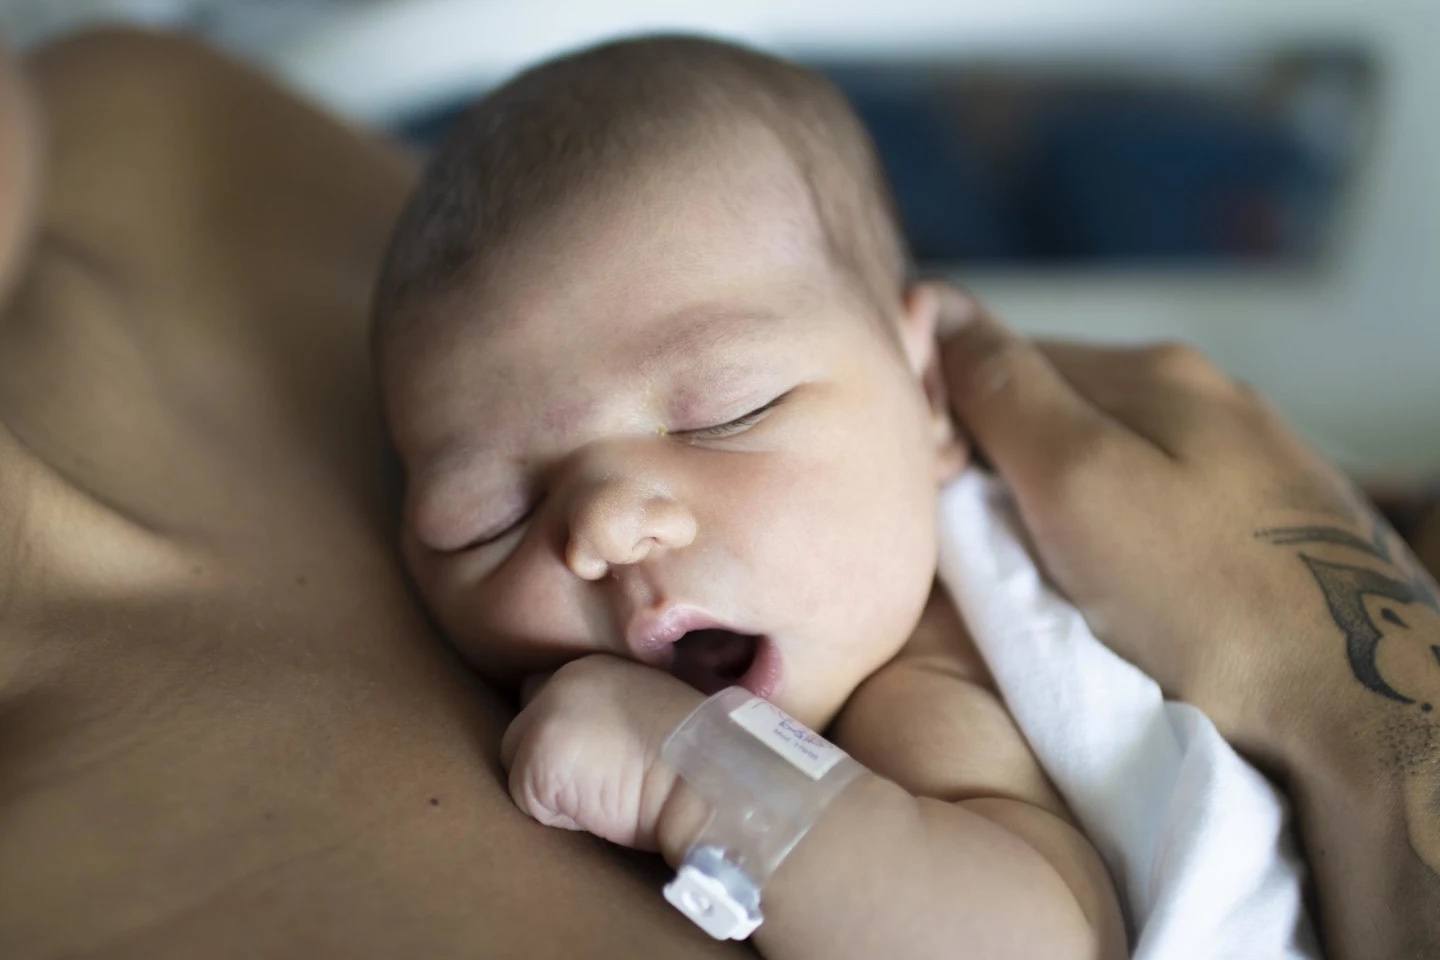 cute newborn baby with whose parents debated gender neutral names